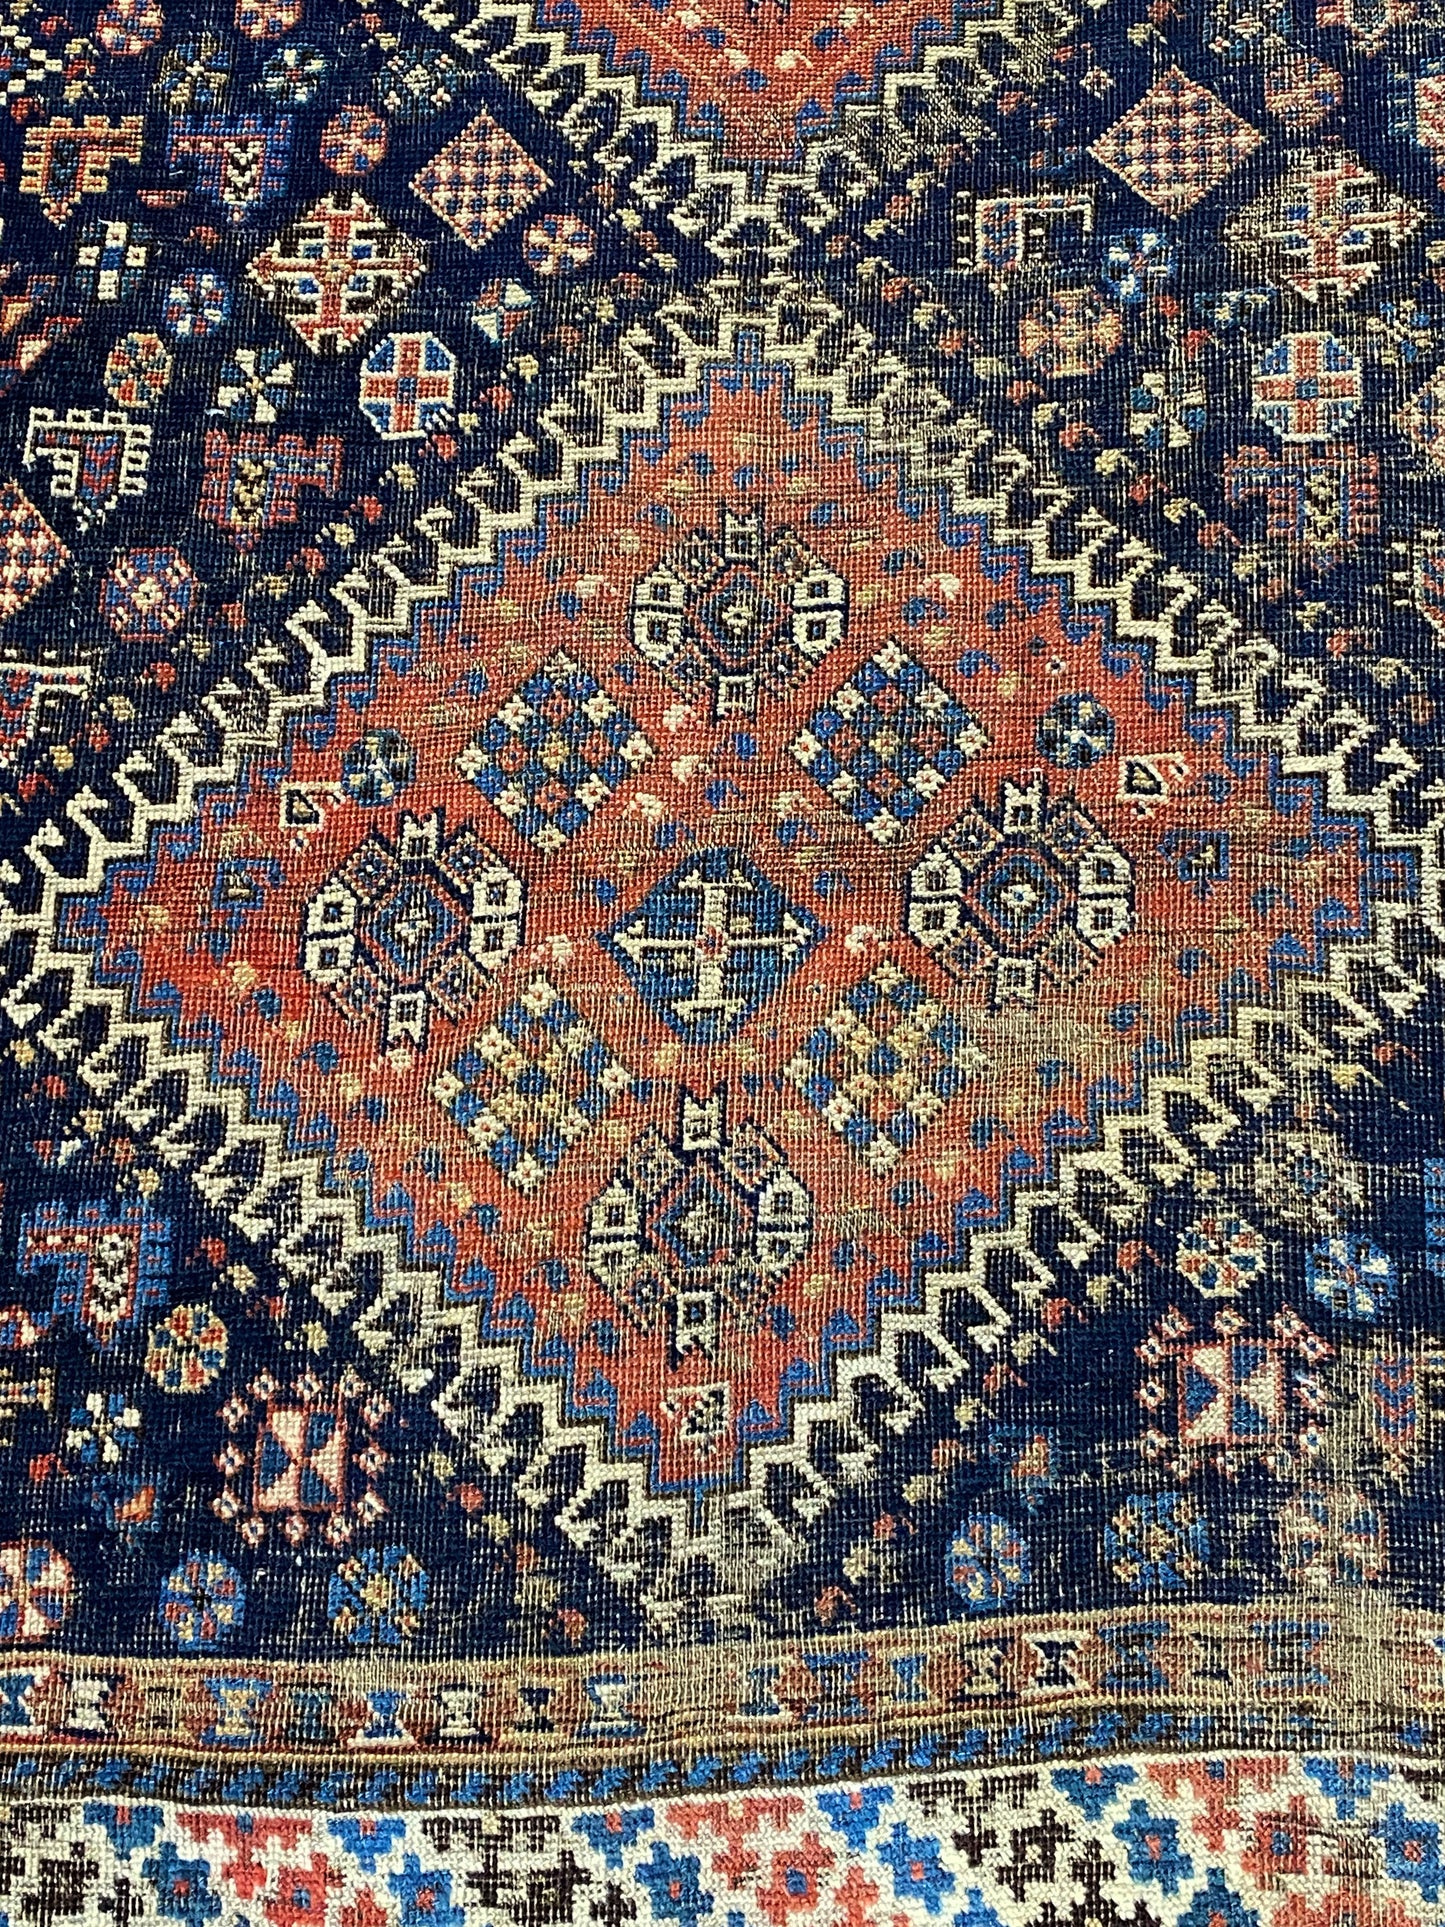 #7153   Rare Antique Tribal  Persian  Kamseh  /Qasqai Rug  7' 6" BY 4'.9"